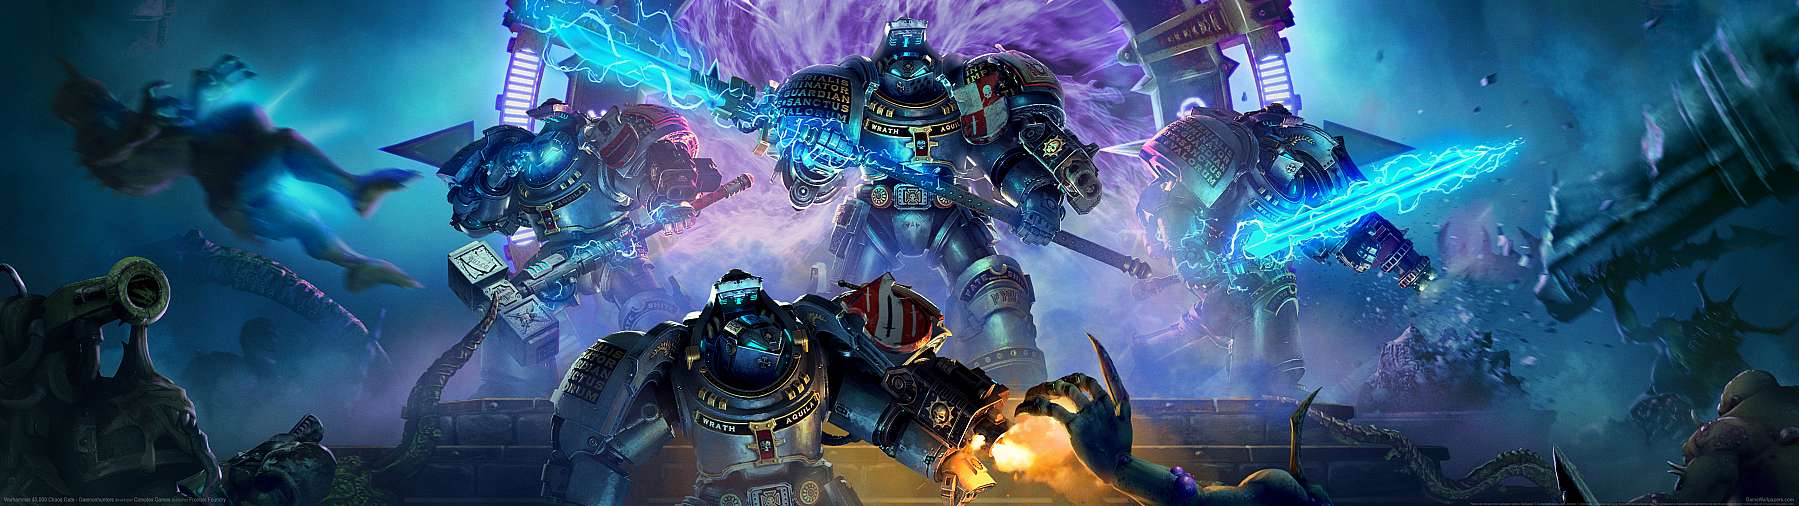 Warhammer 40,000: Chaos Gate - Daemonhunters superwide fond d'cran 01